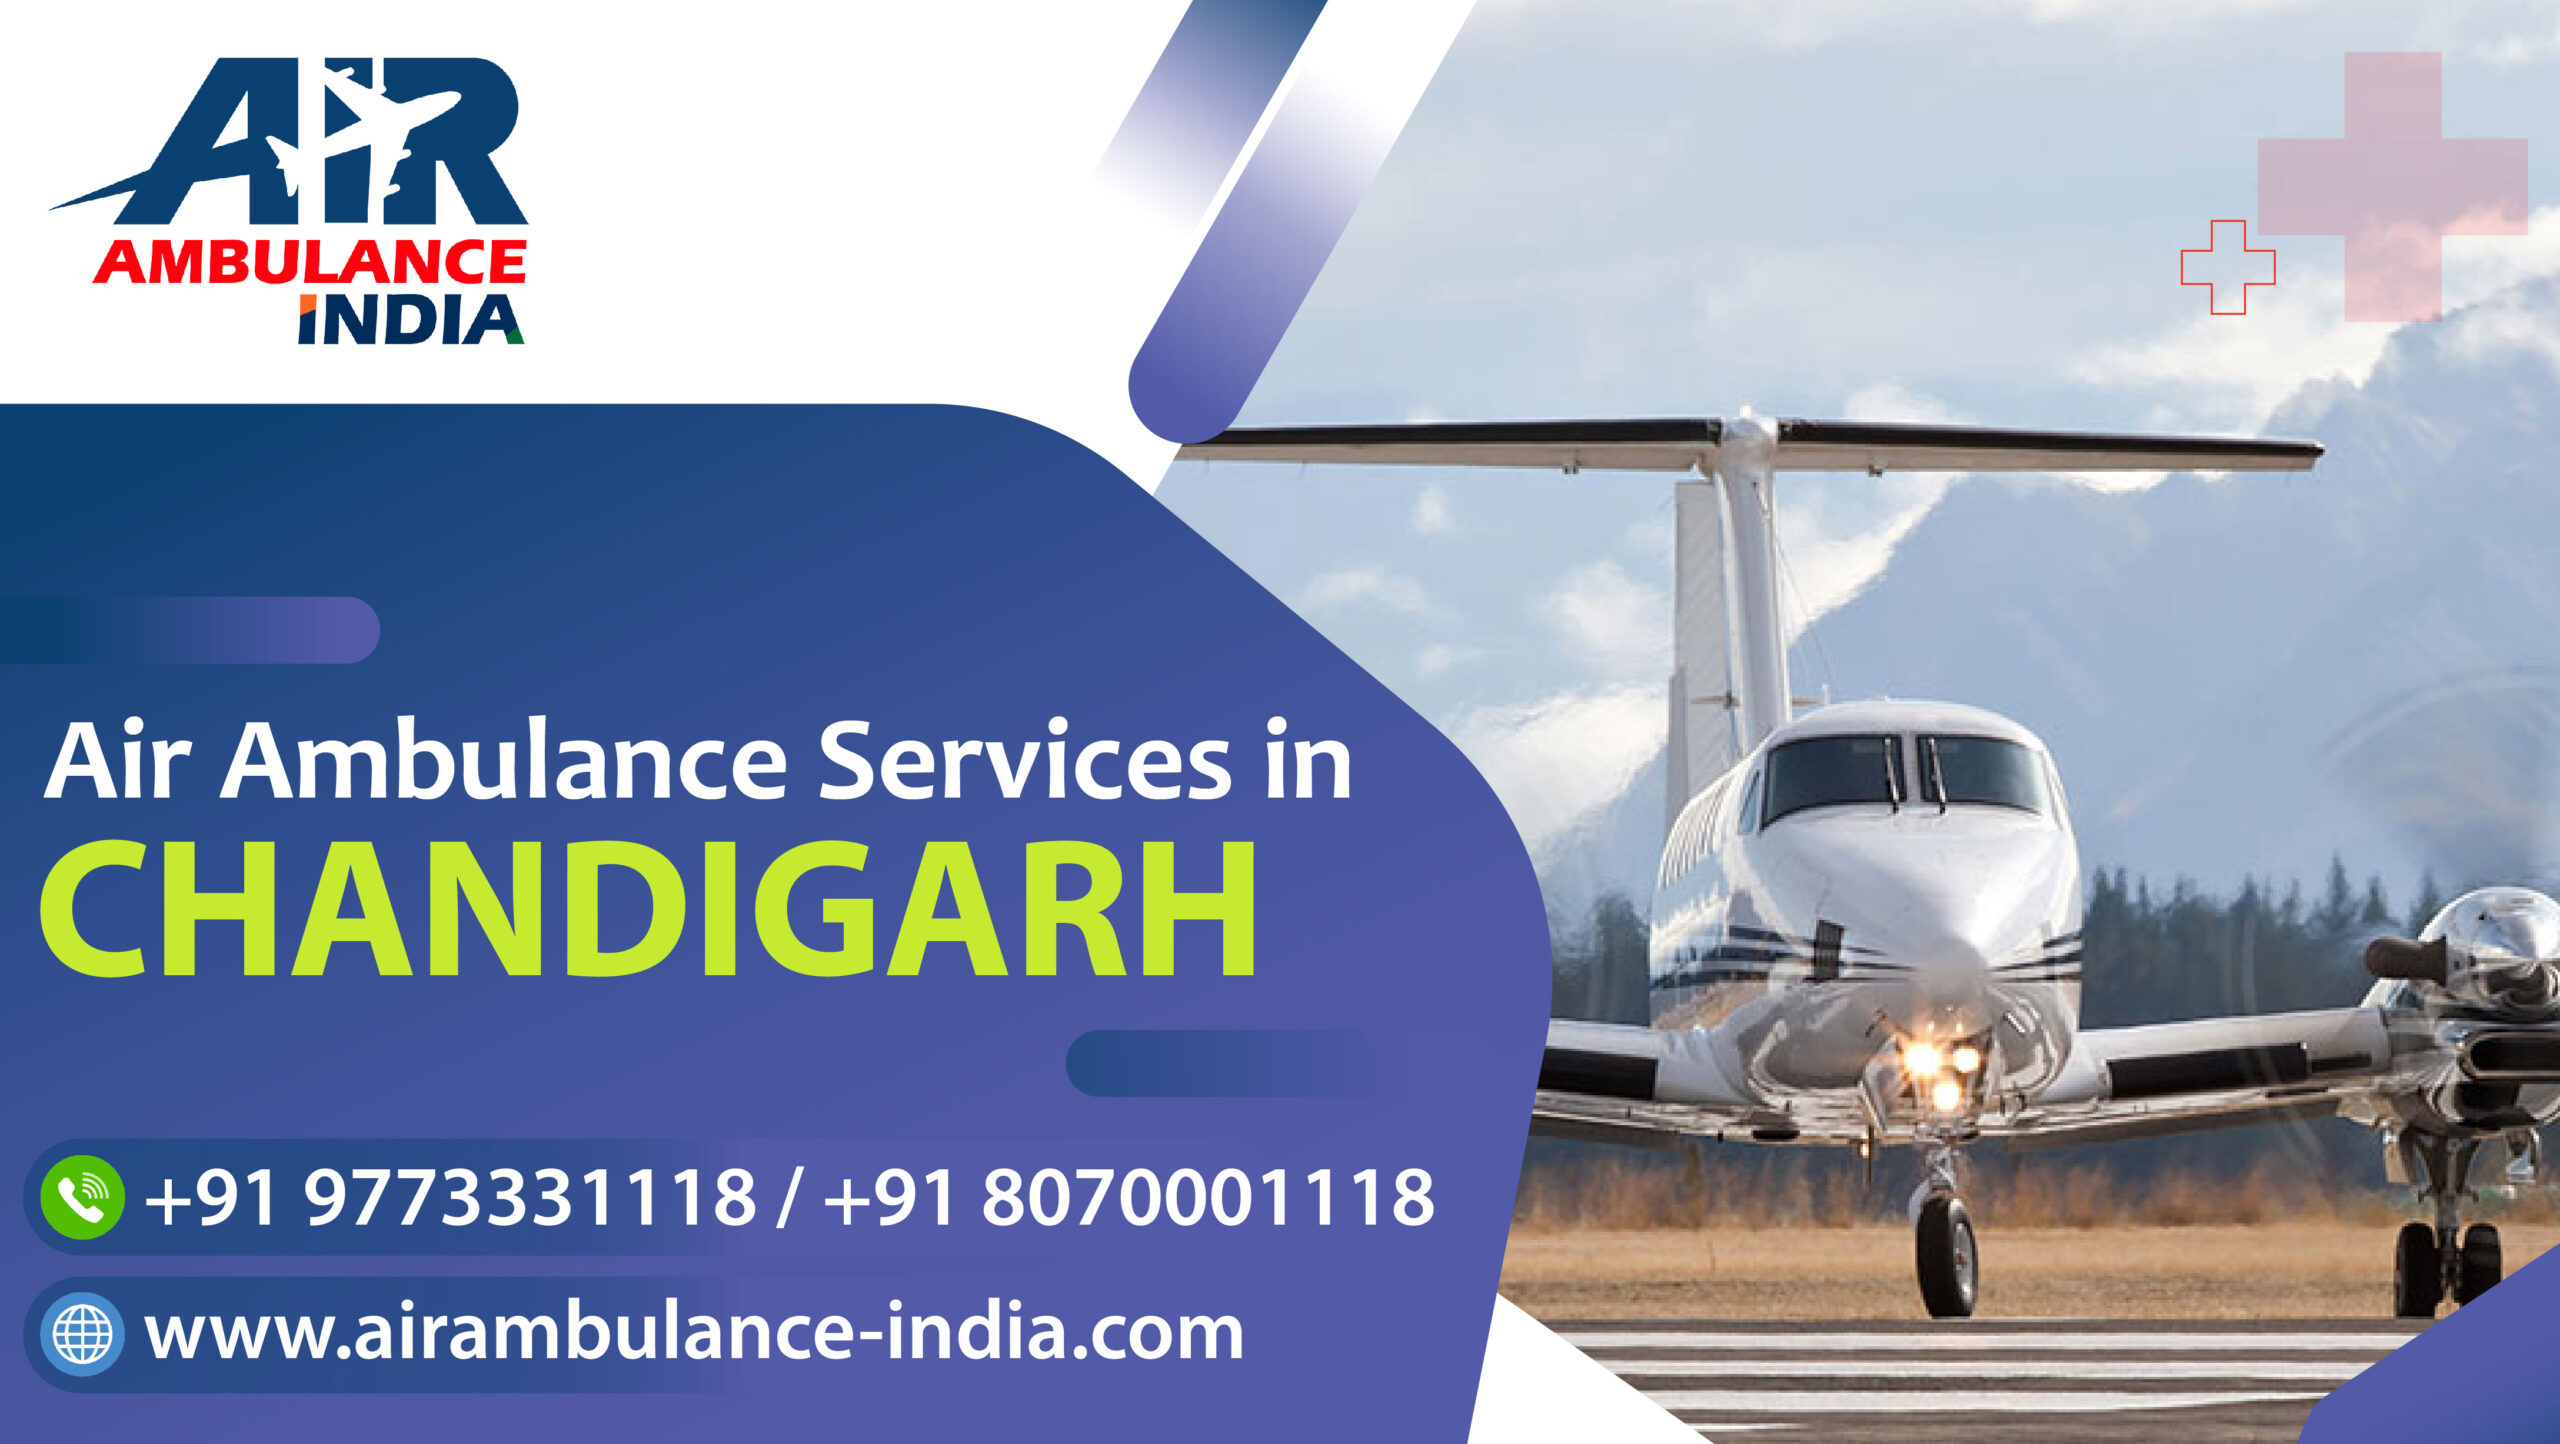 Air Ambulance Services in Chandigarh